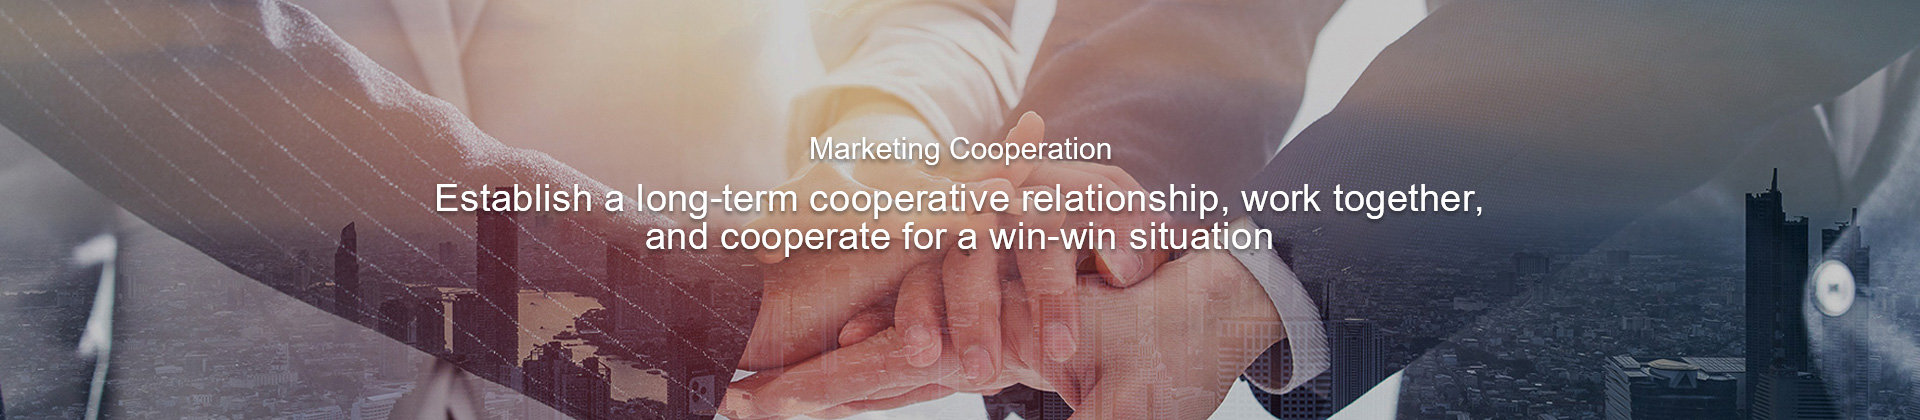 Marketing Cooperation